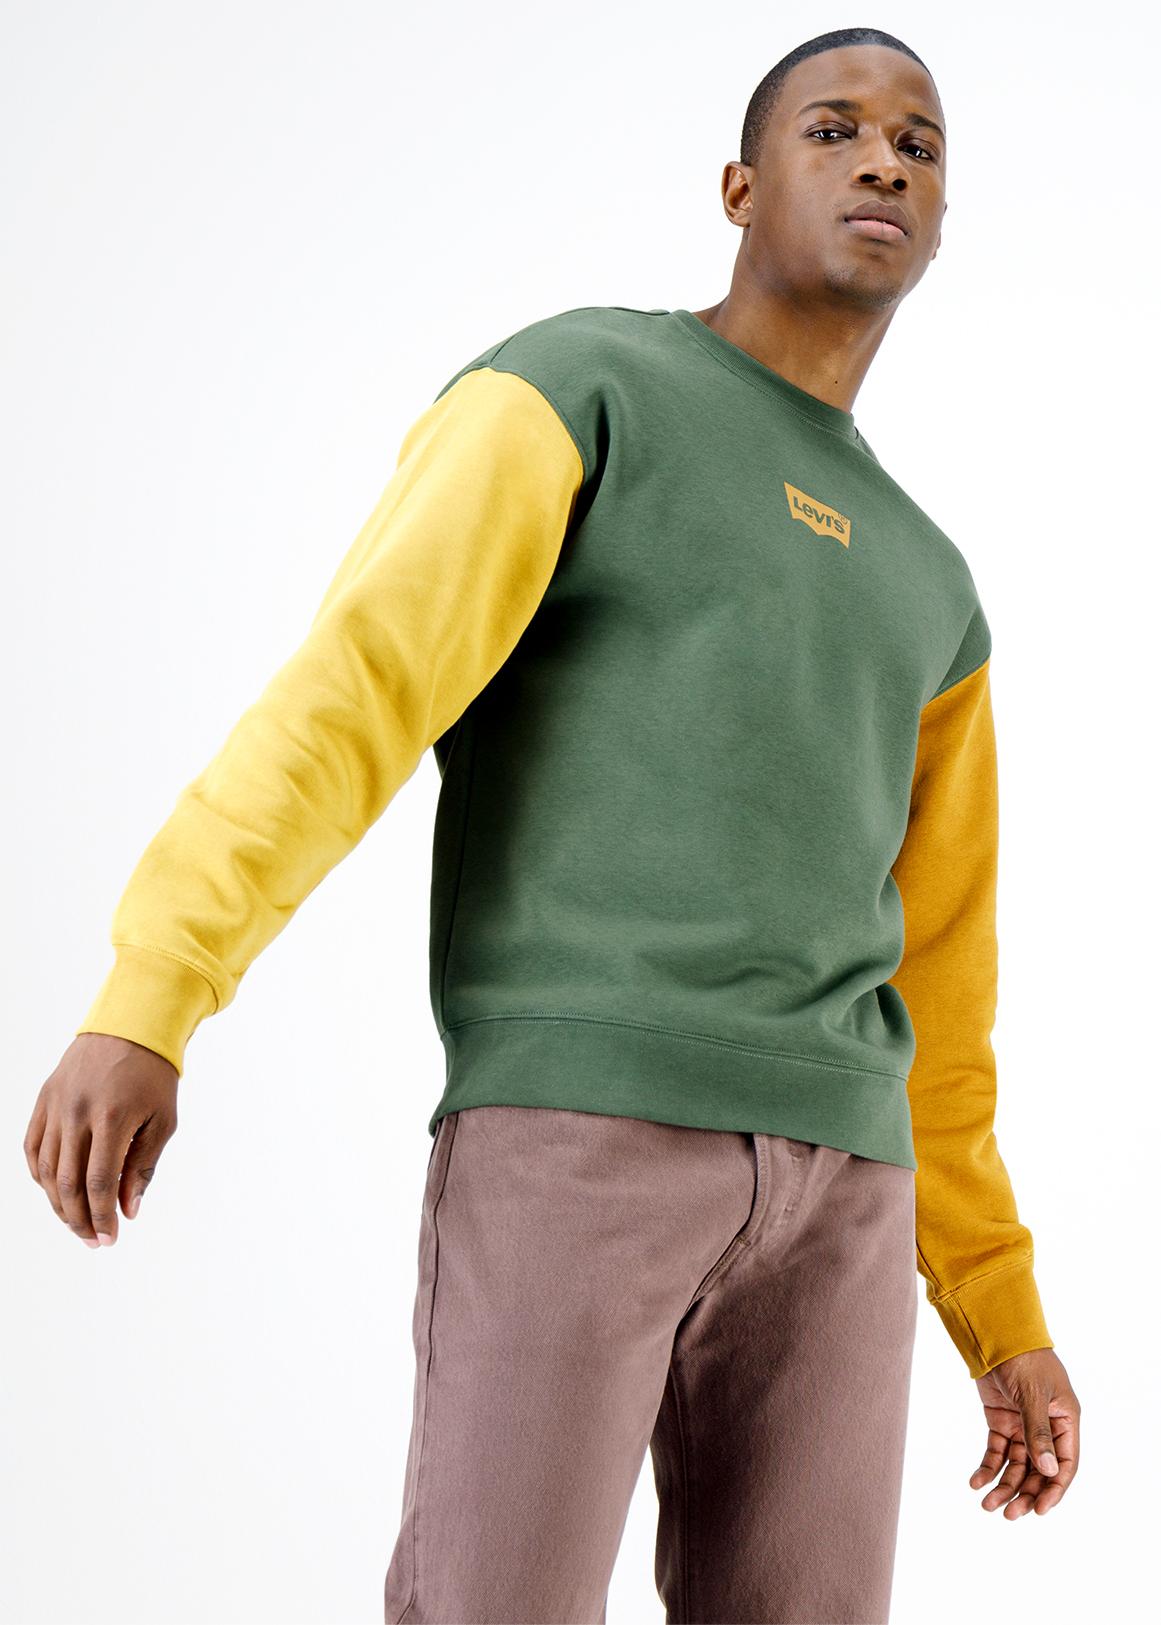 Levi's modern color block crewneck sweatshirt small batwing logo in  navy/red/yellow